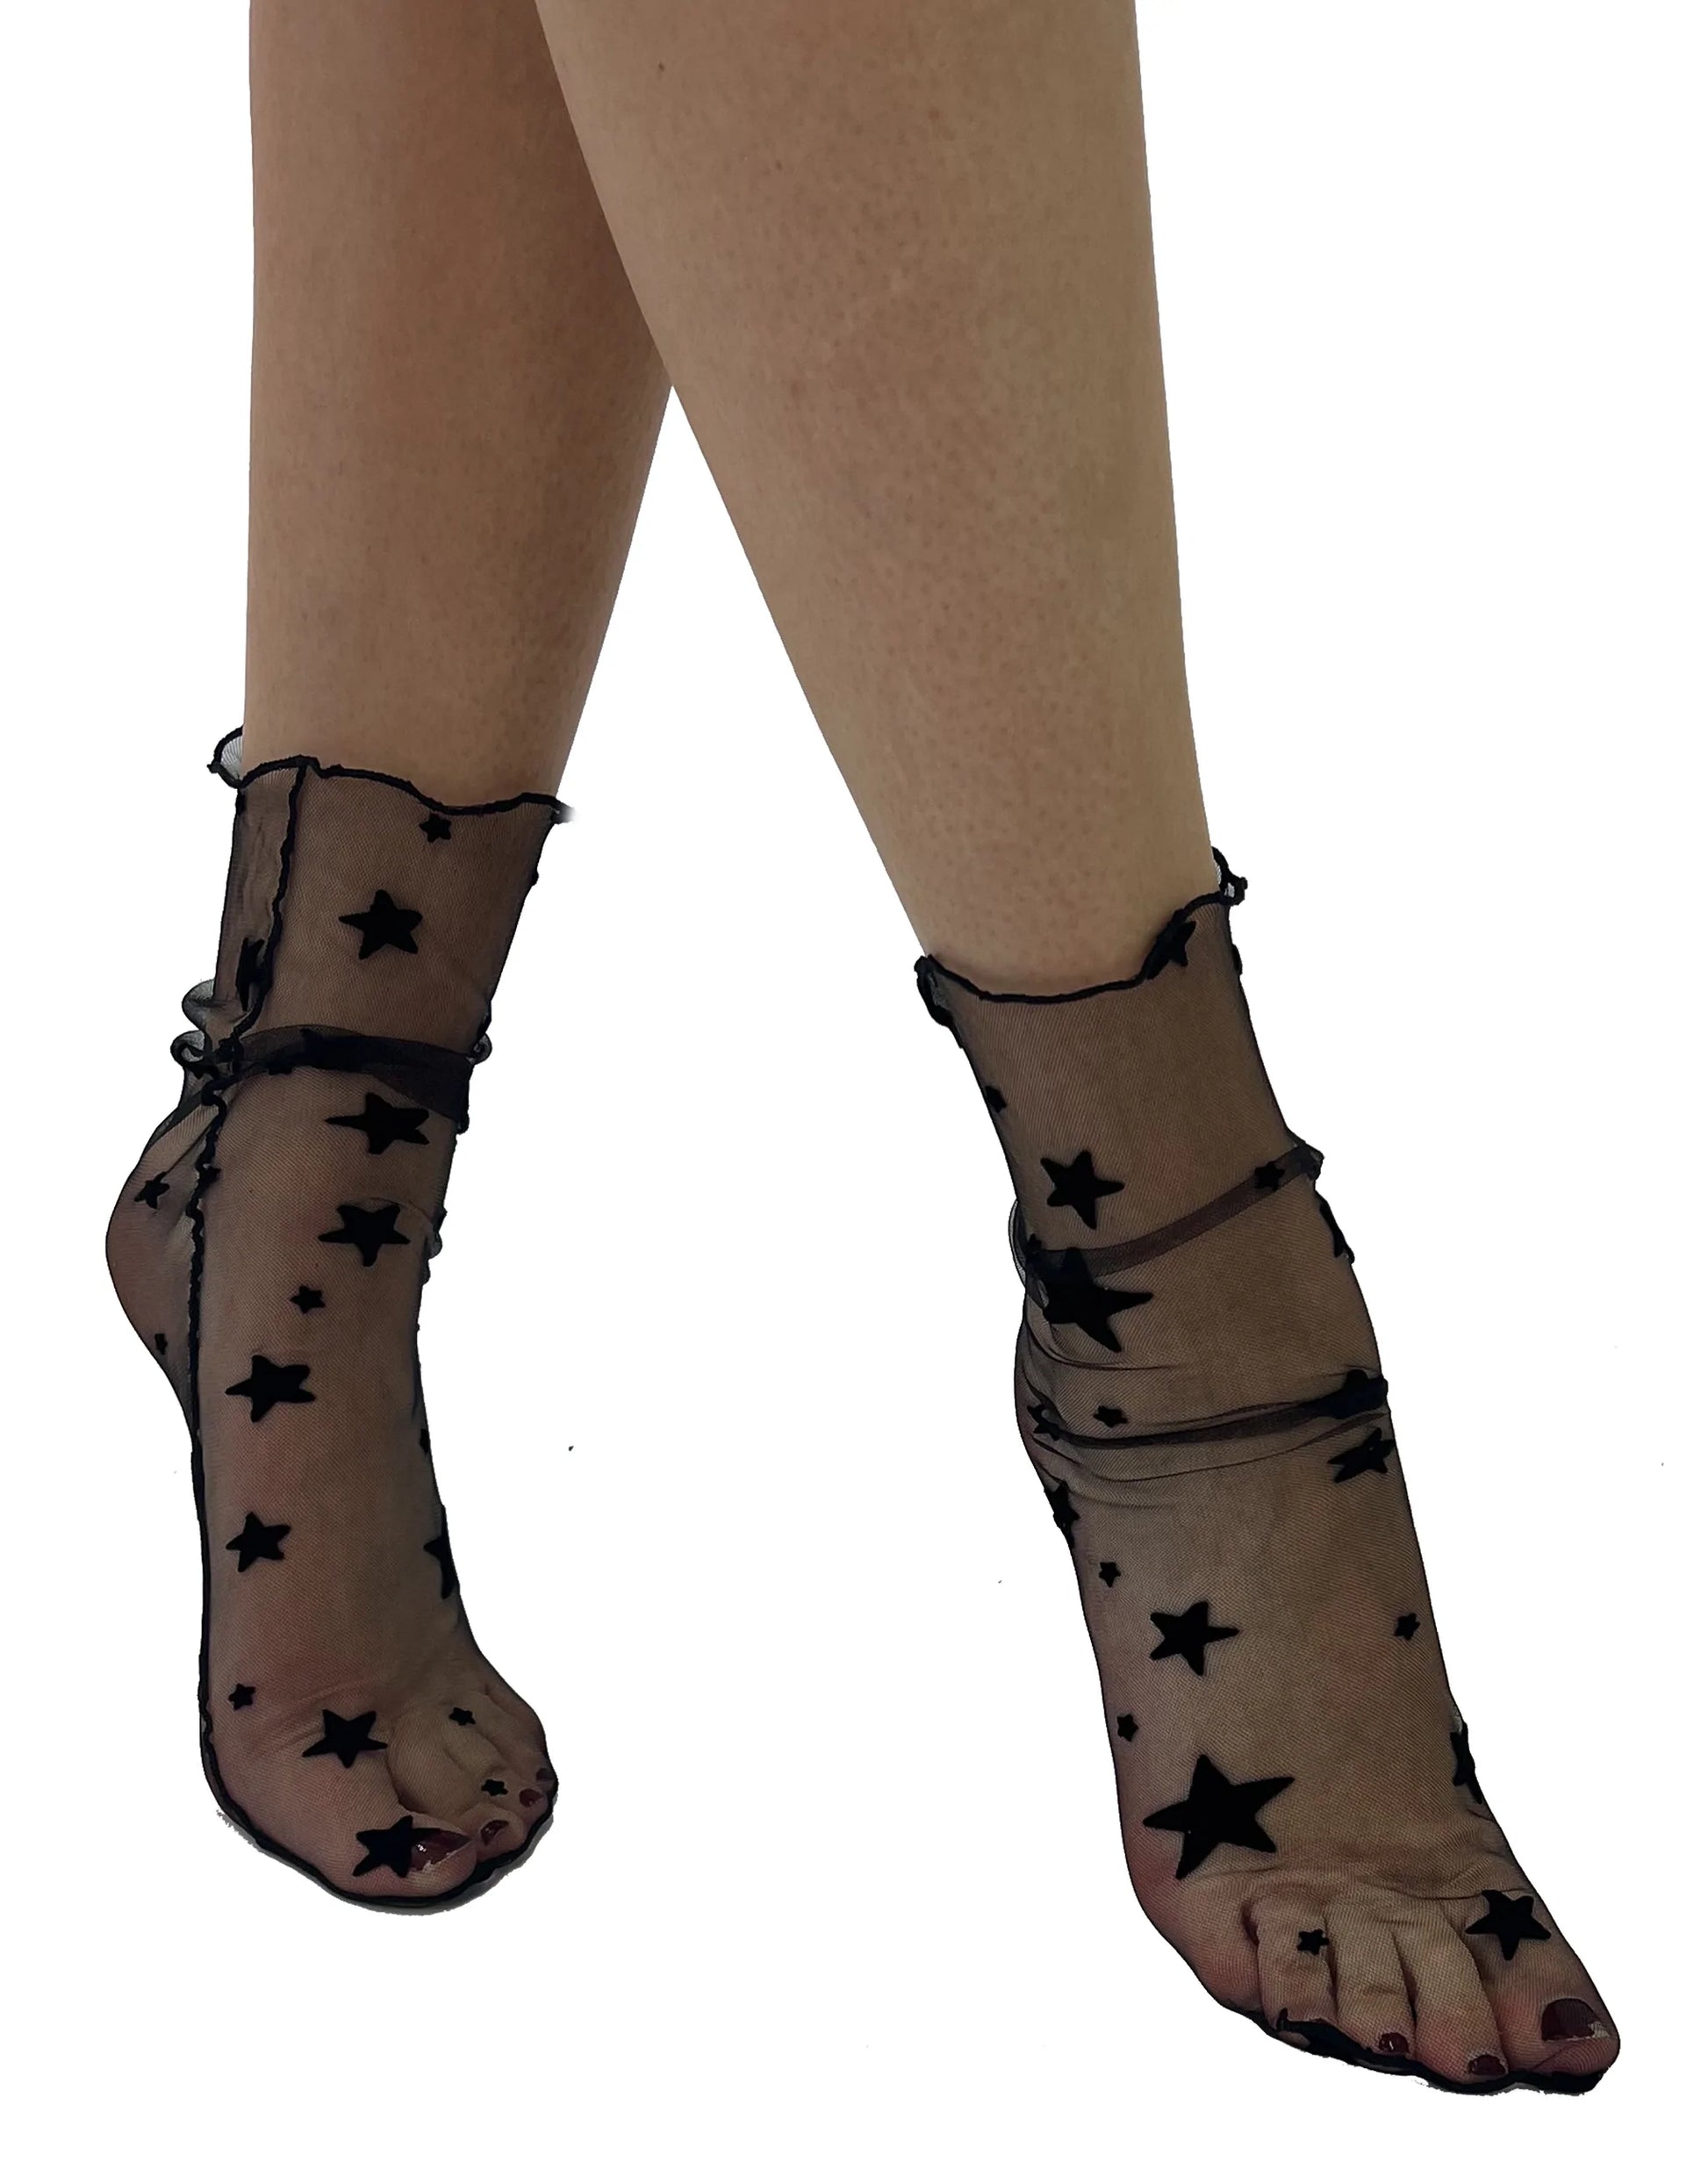 Pamela Mann Tulle Star Socks - Sheer black no cuff mesh tulle ankle socks with a velvet flock star pattern print and side seams.